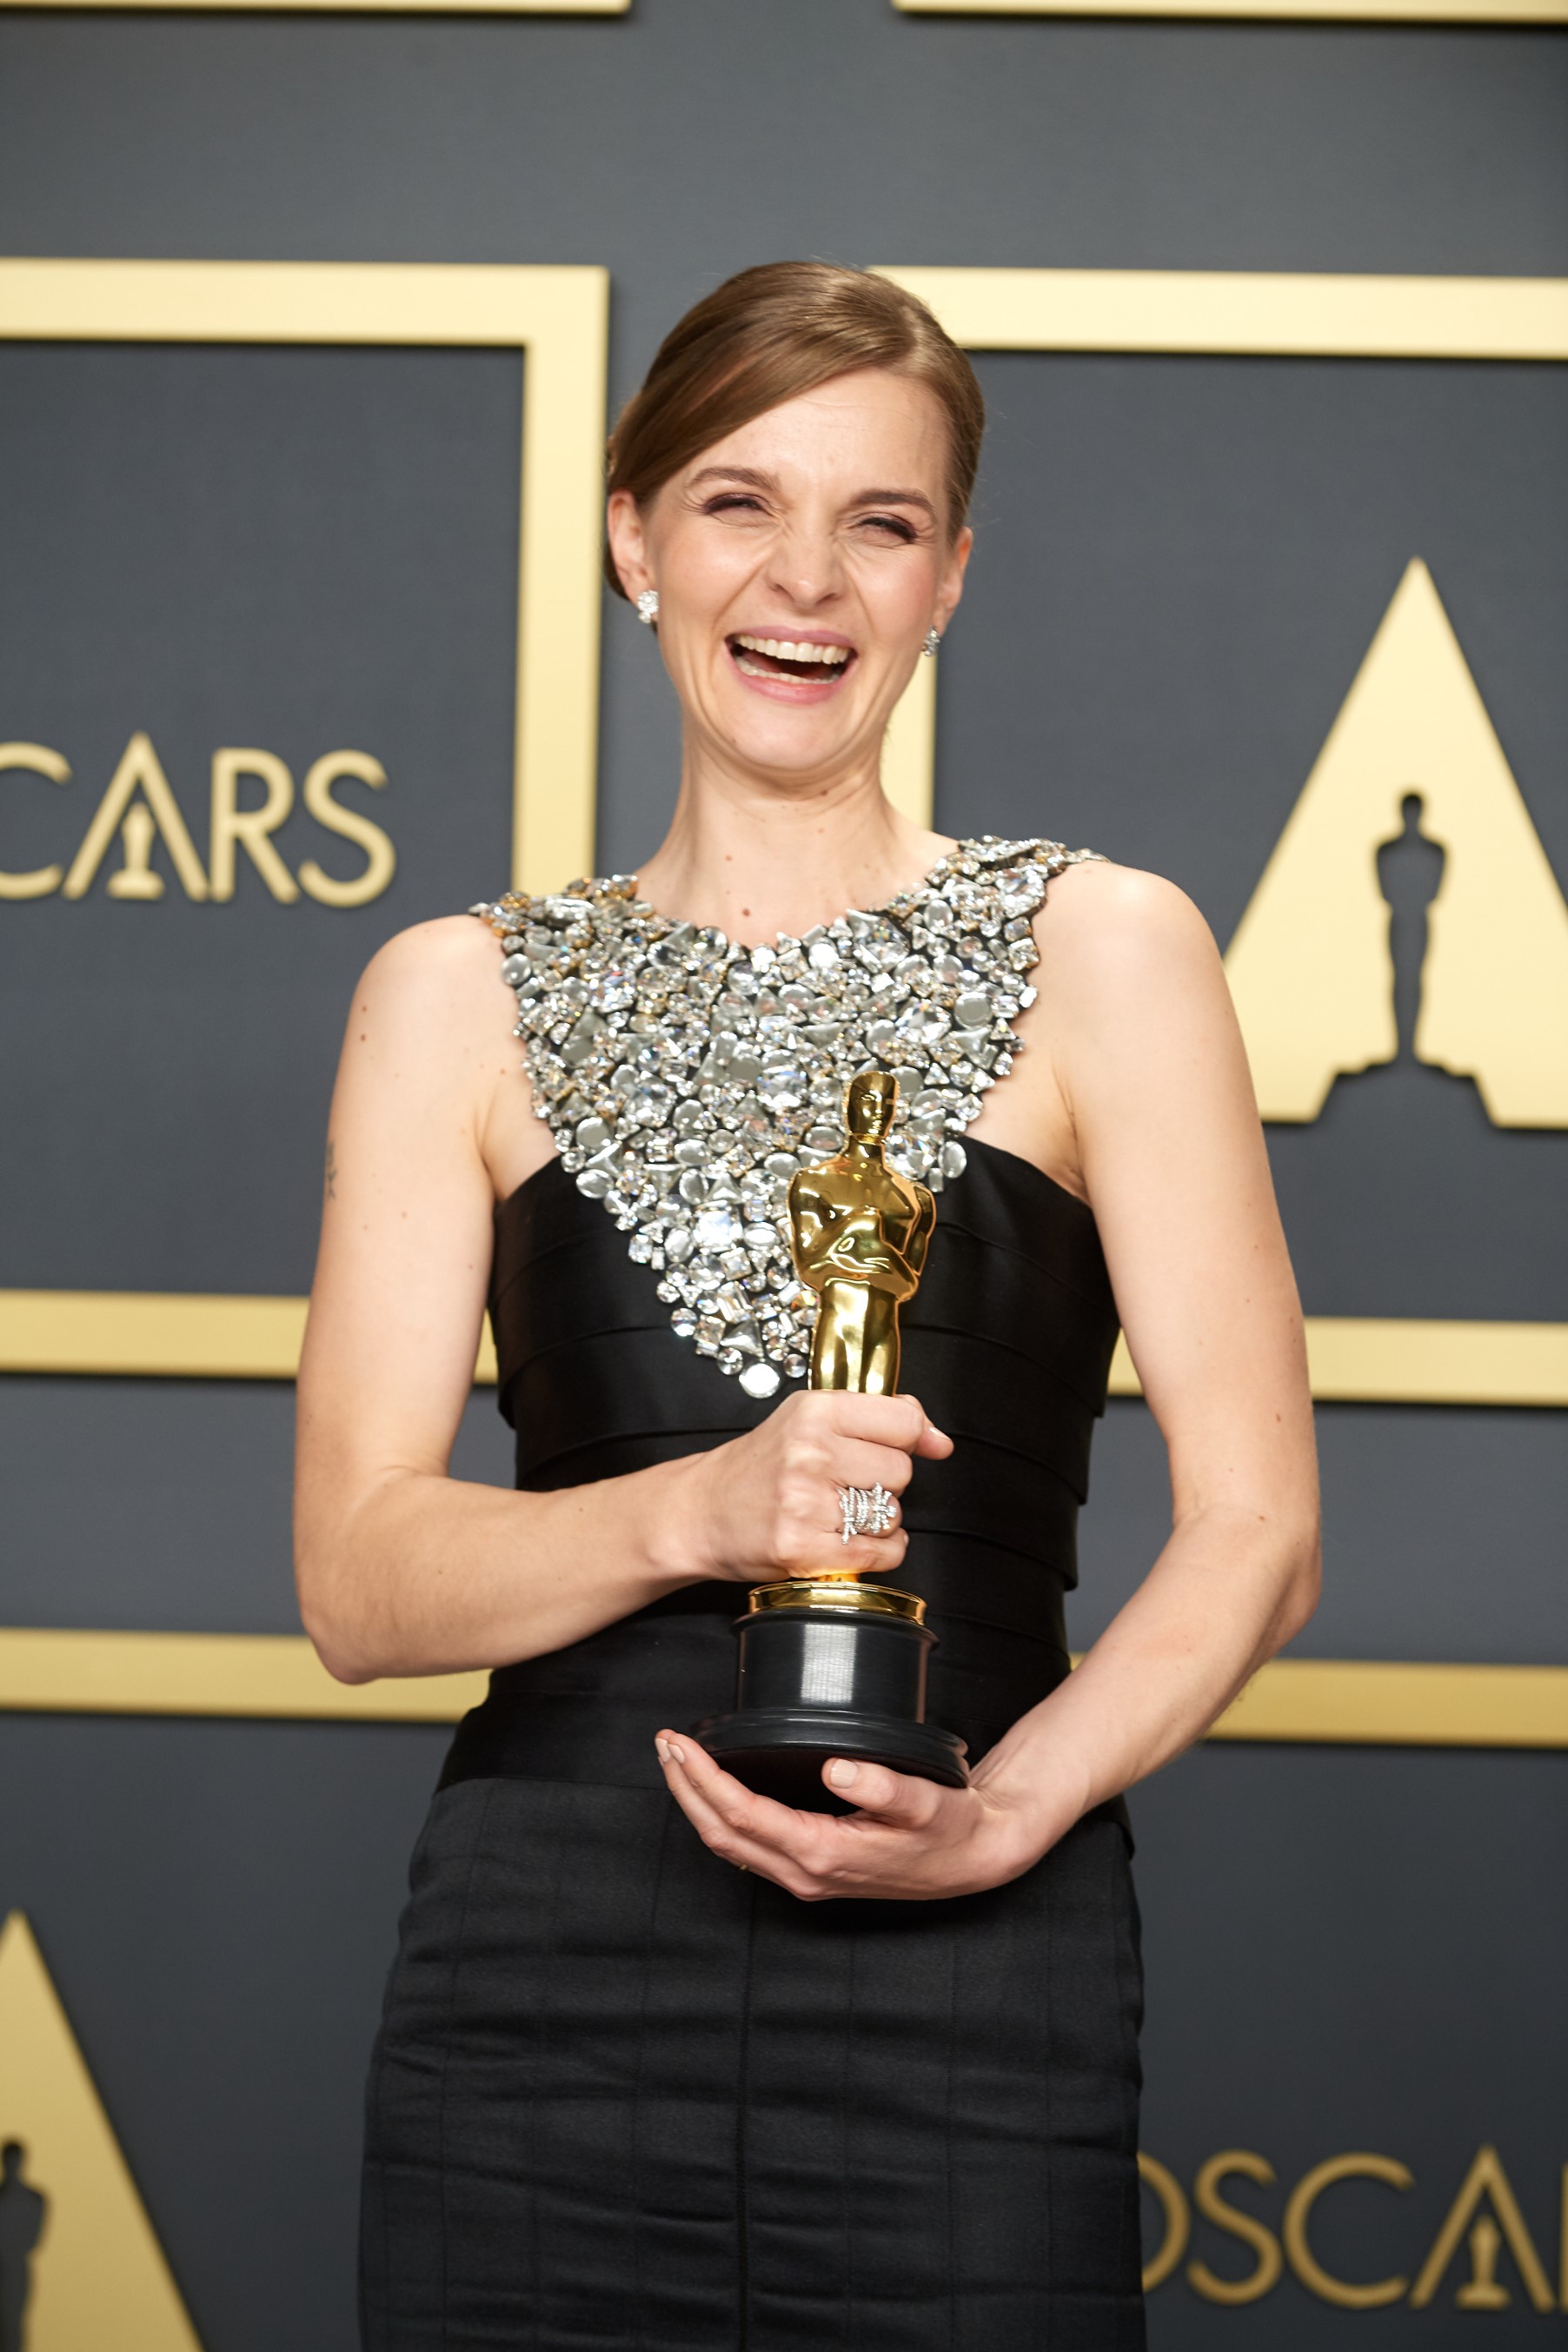 Hildur Guðnadóttir holding the Oscar she received for Best Original Score at the 2020 Academy Awards.